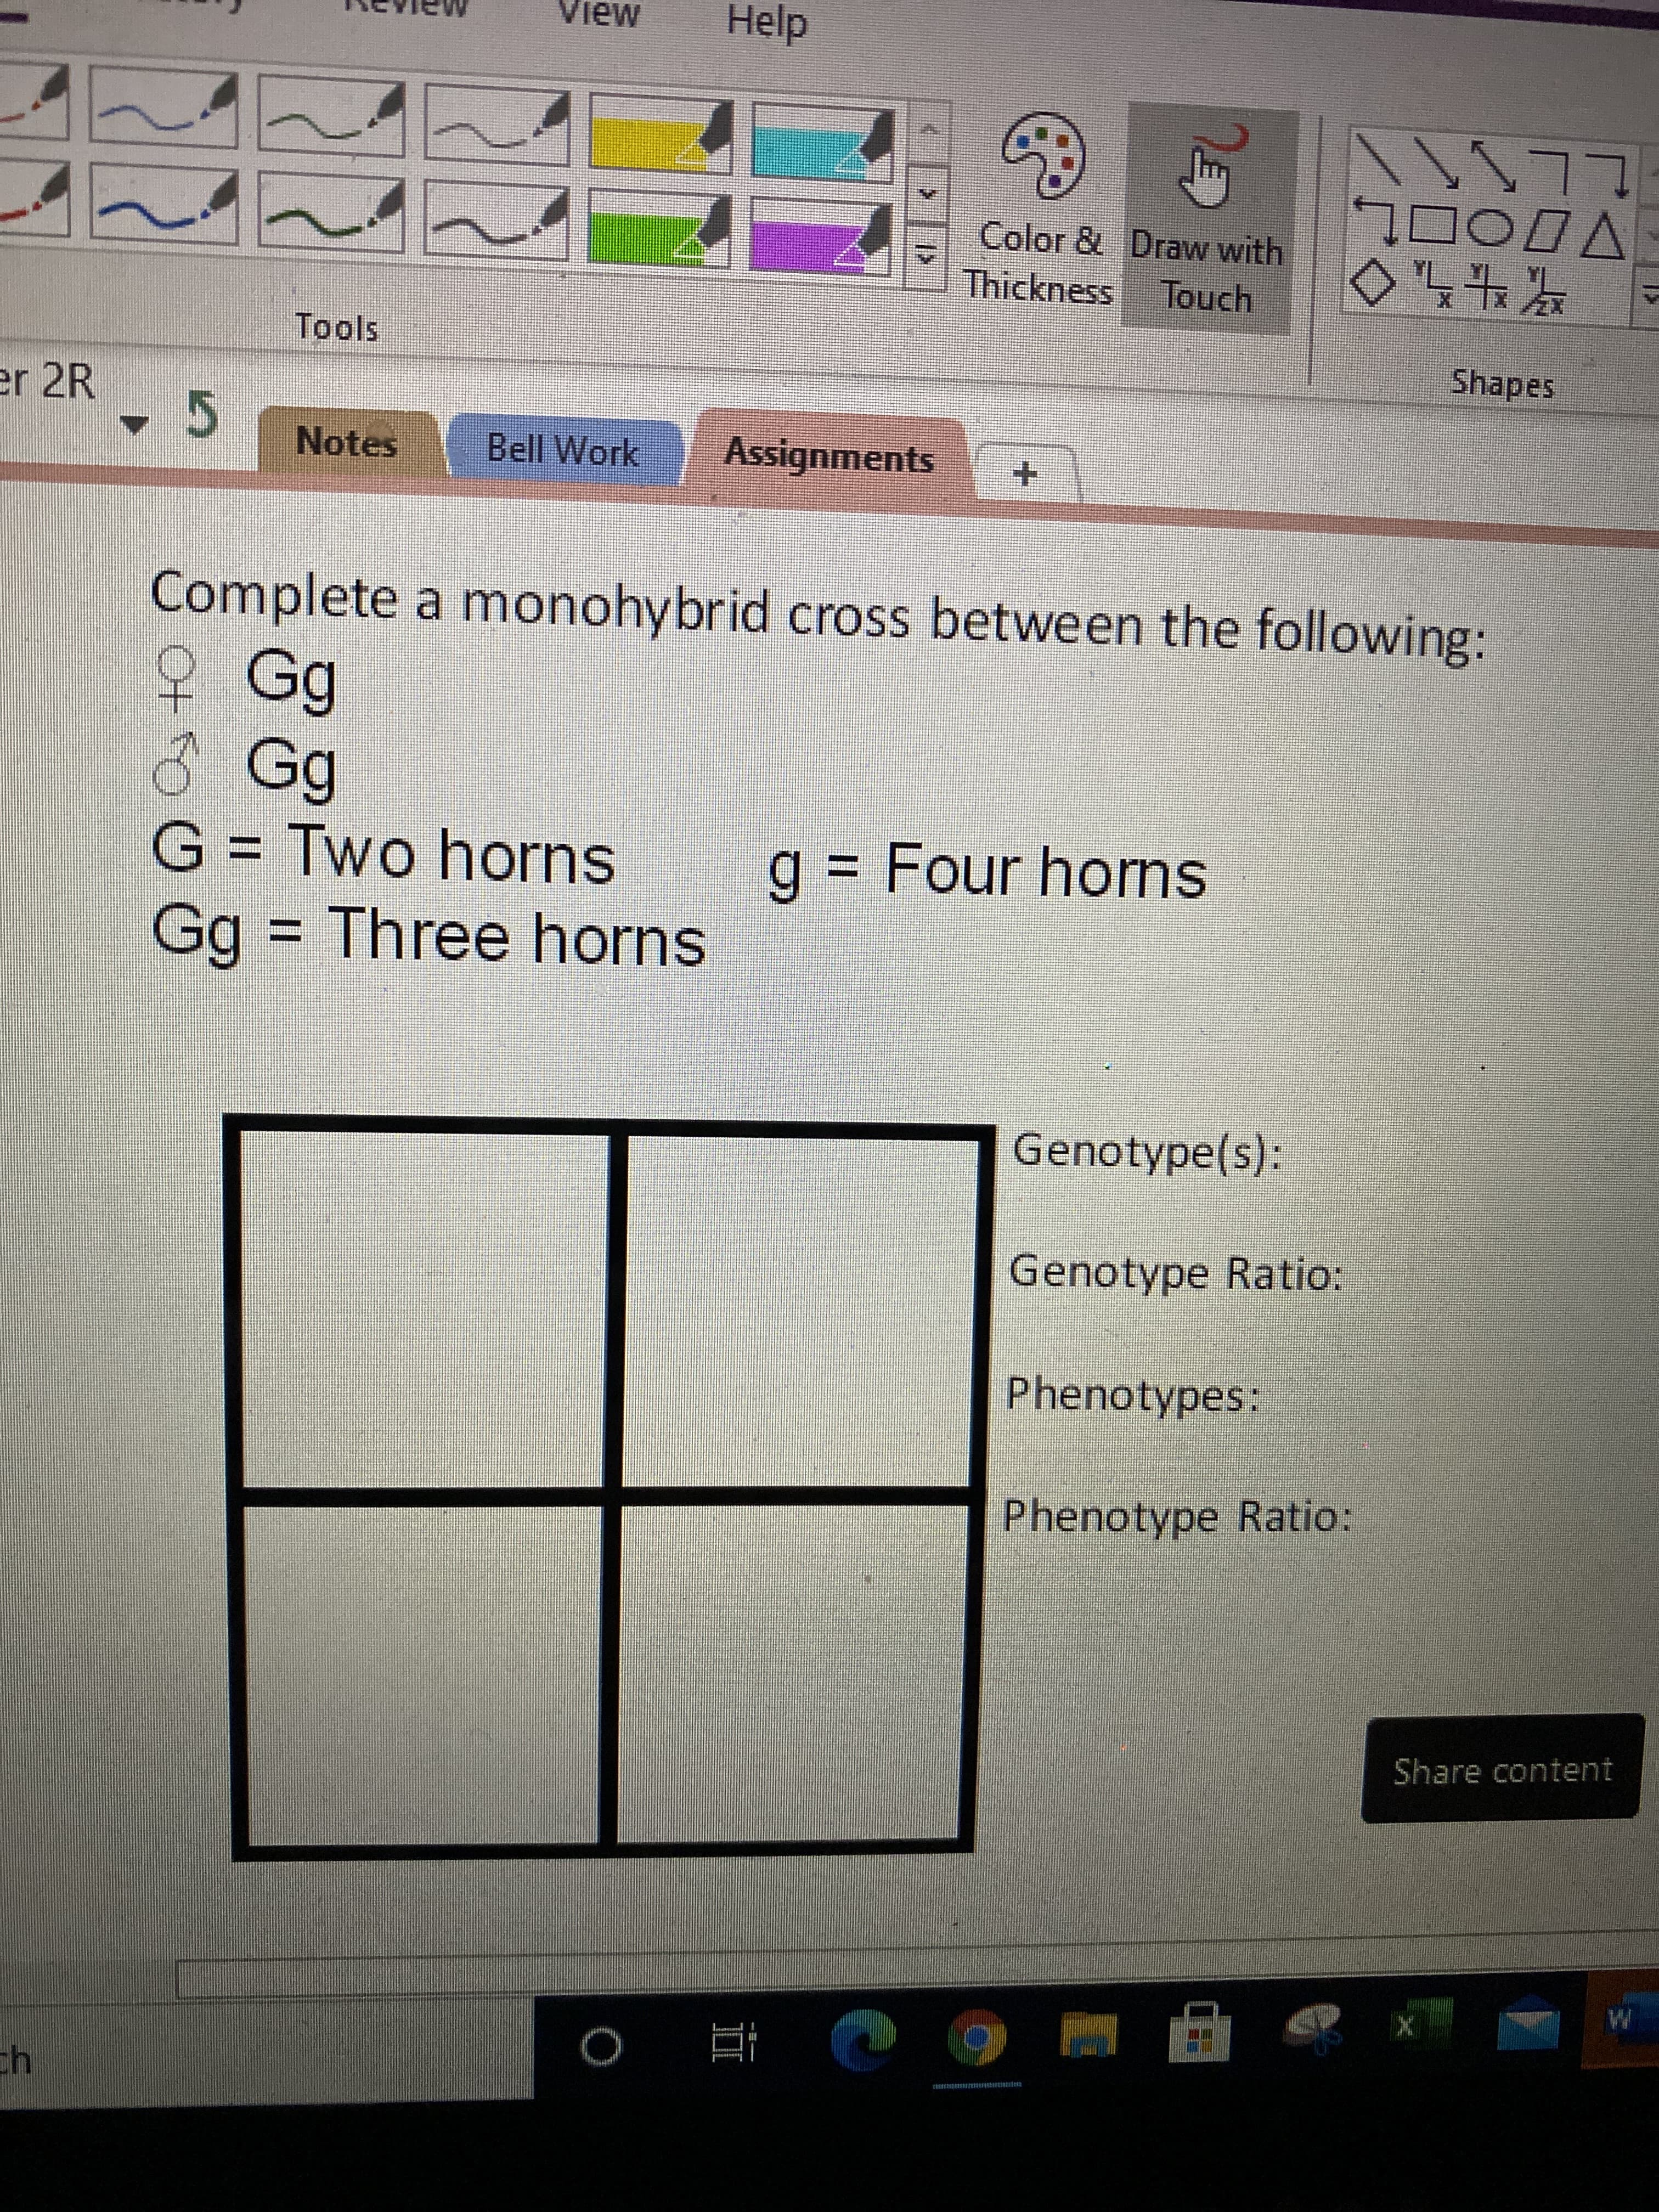 Complete a monohybrid cross between the following:
O Ga
